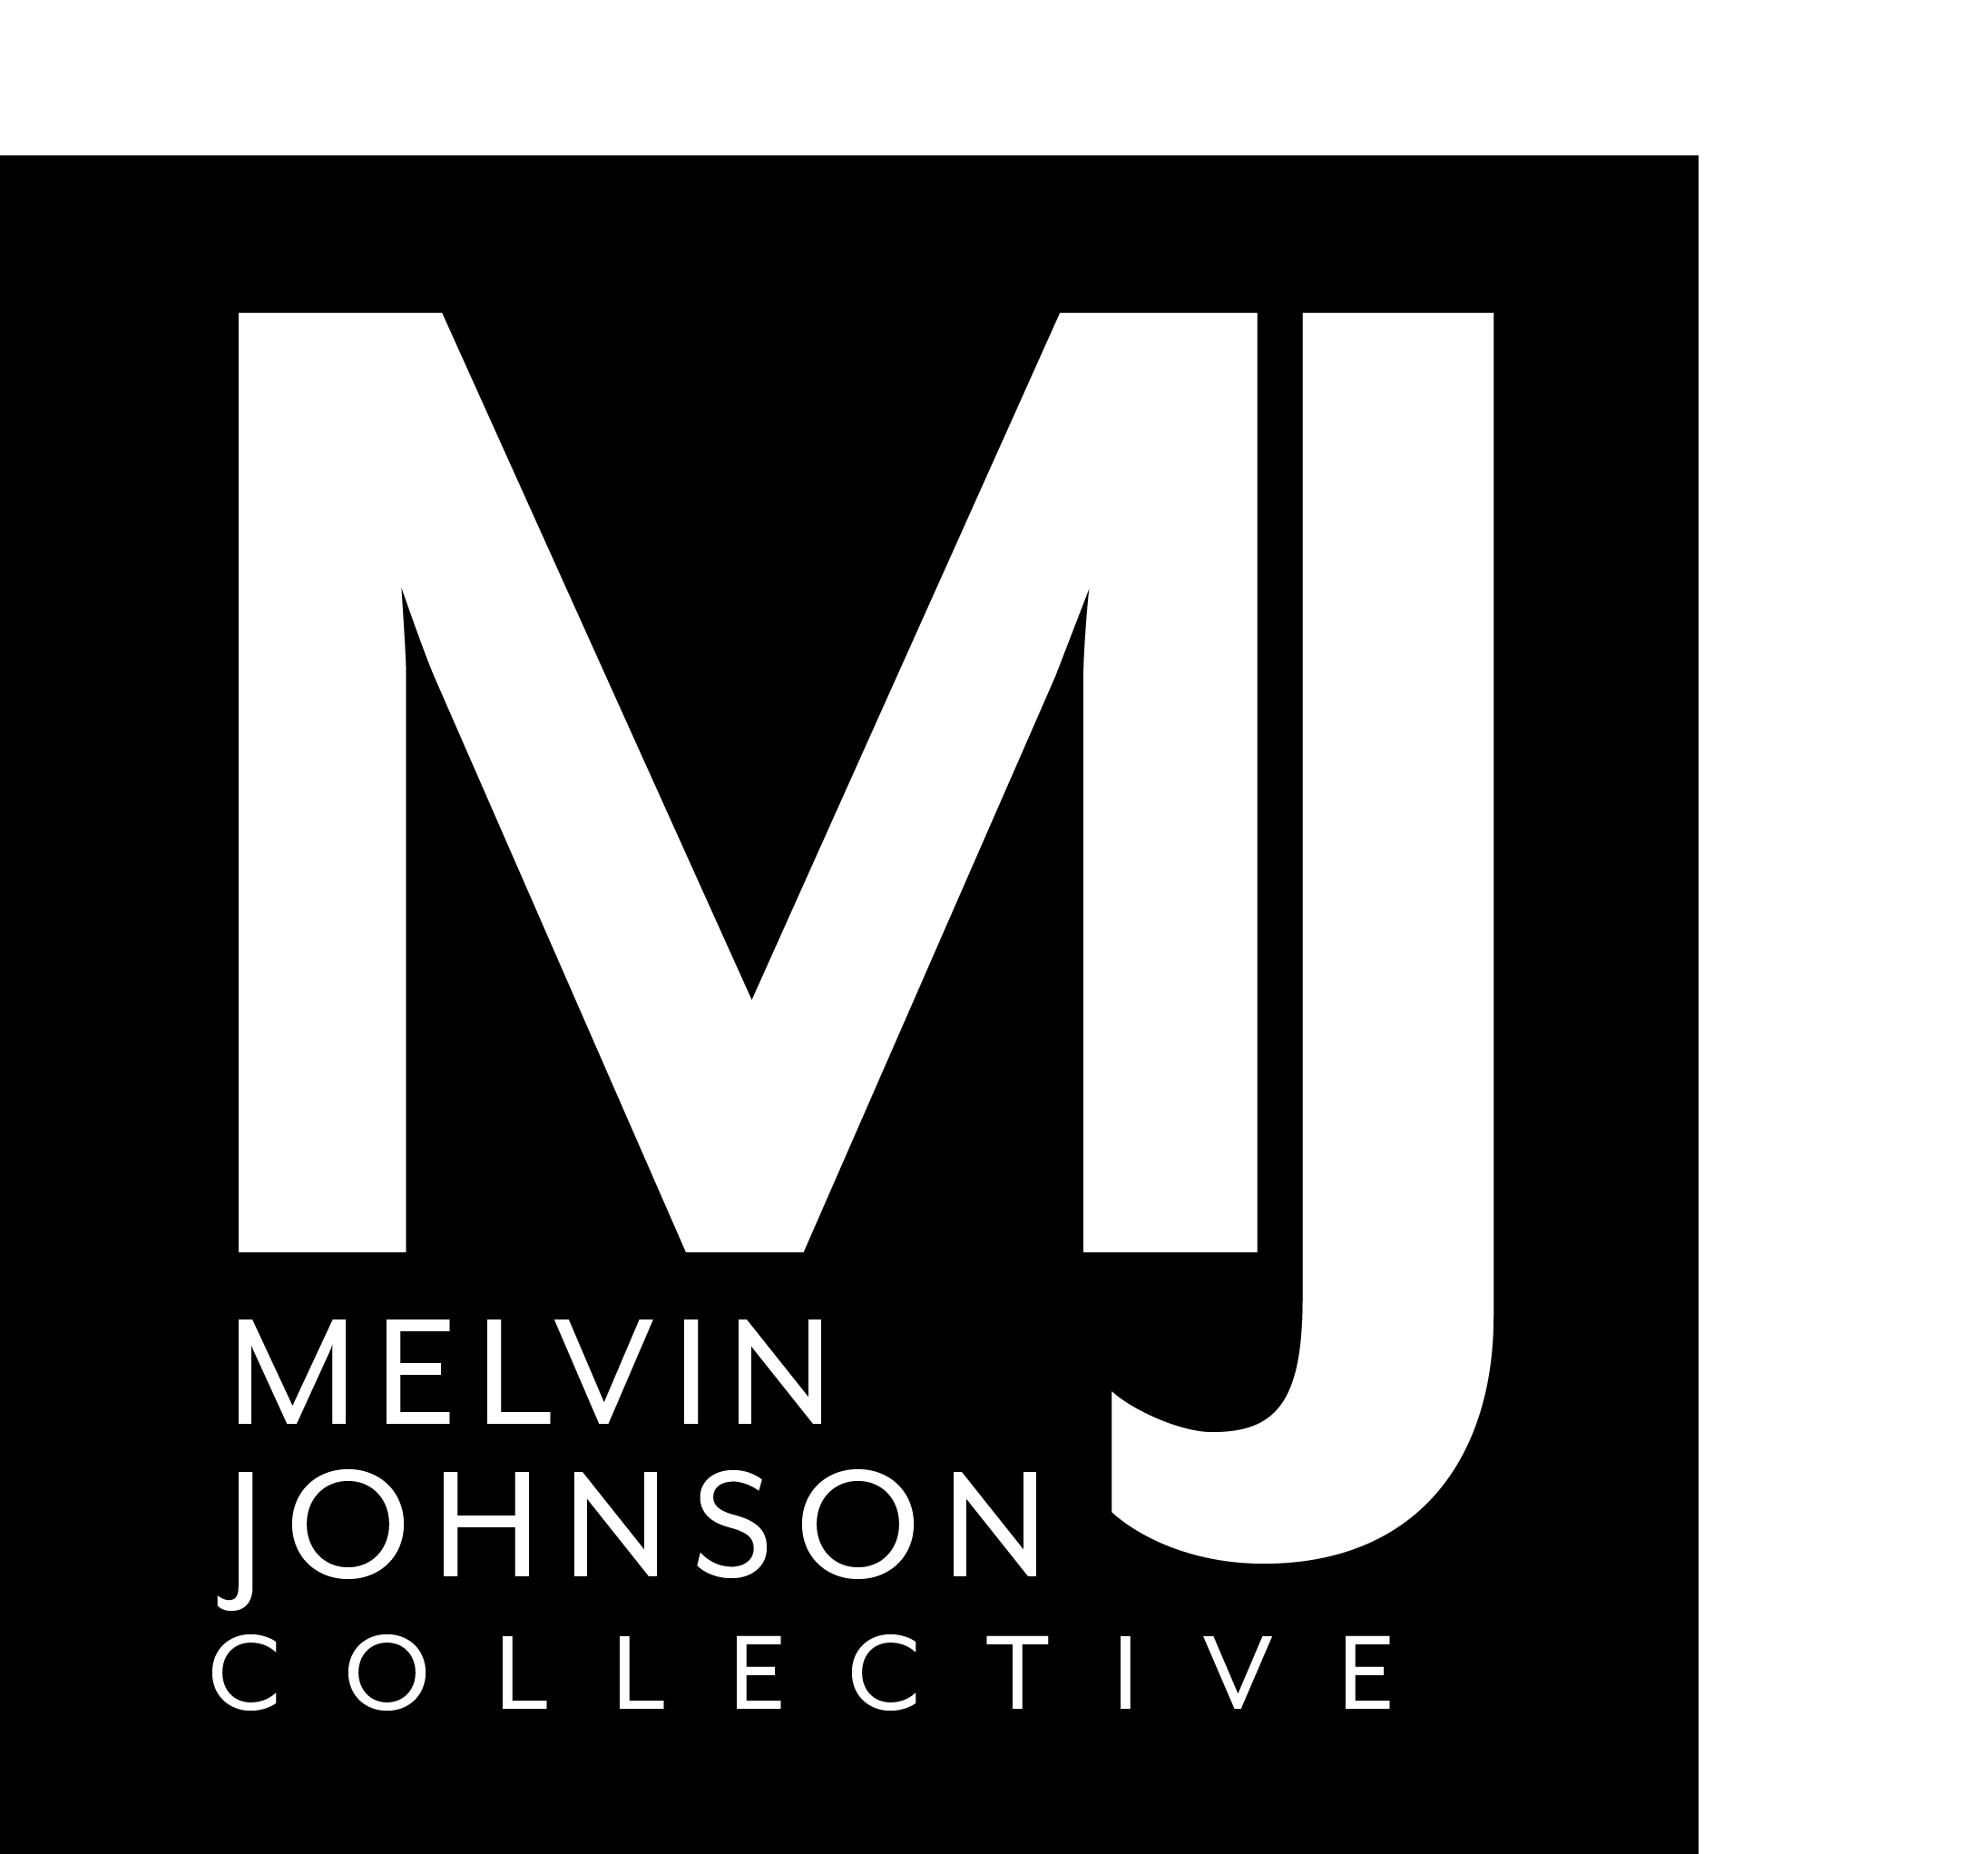 The Melvin Johnson Collective